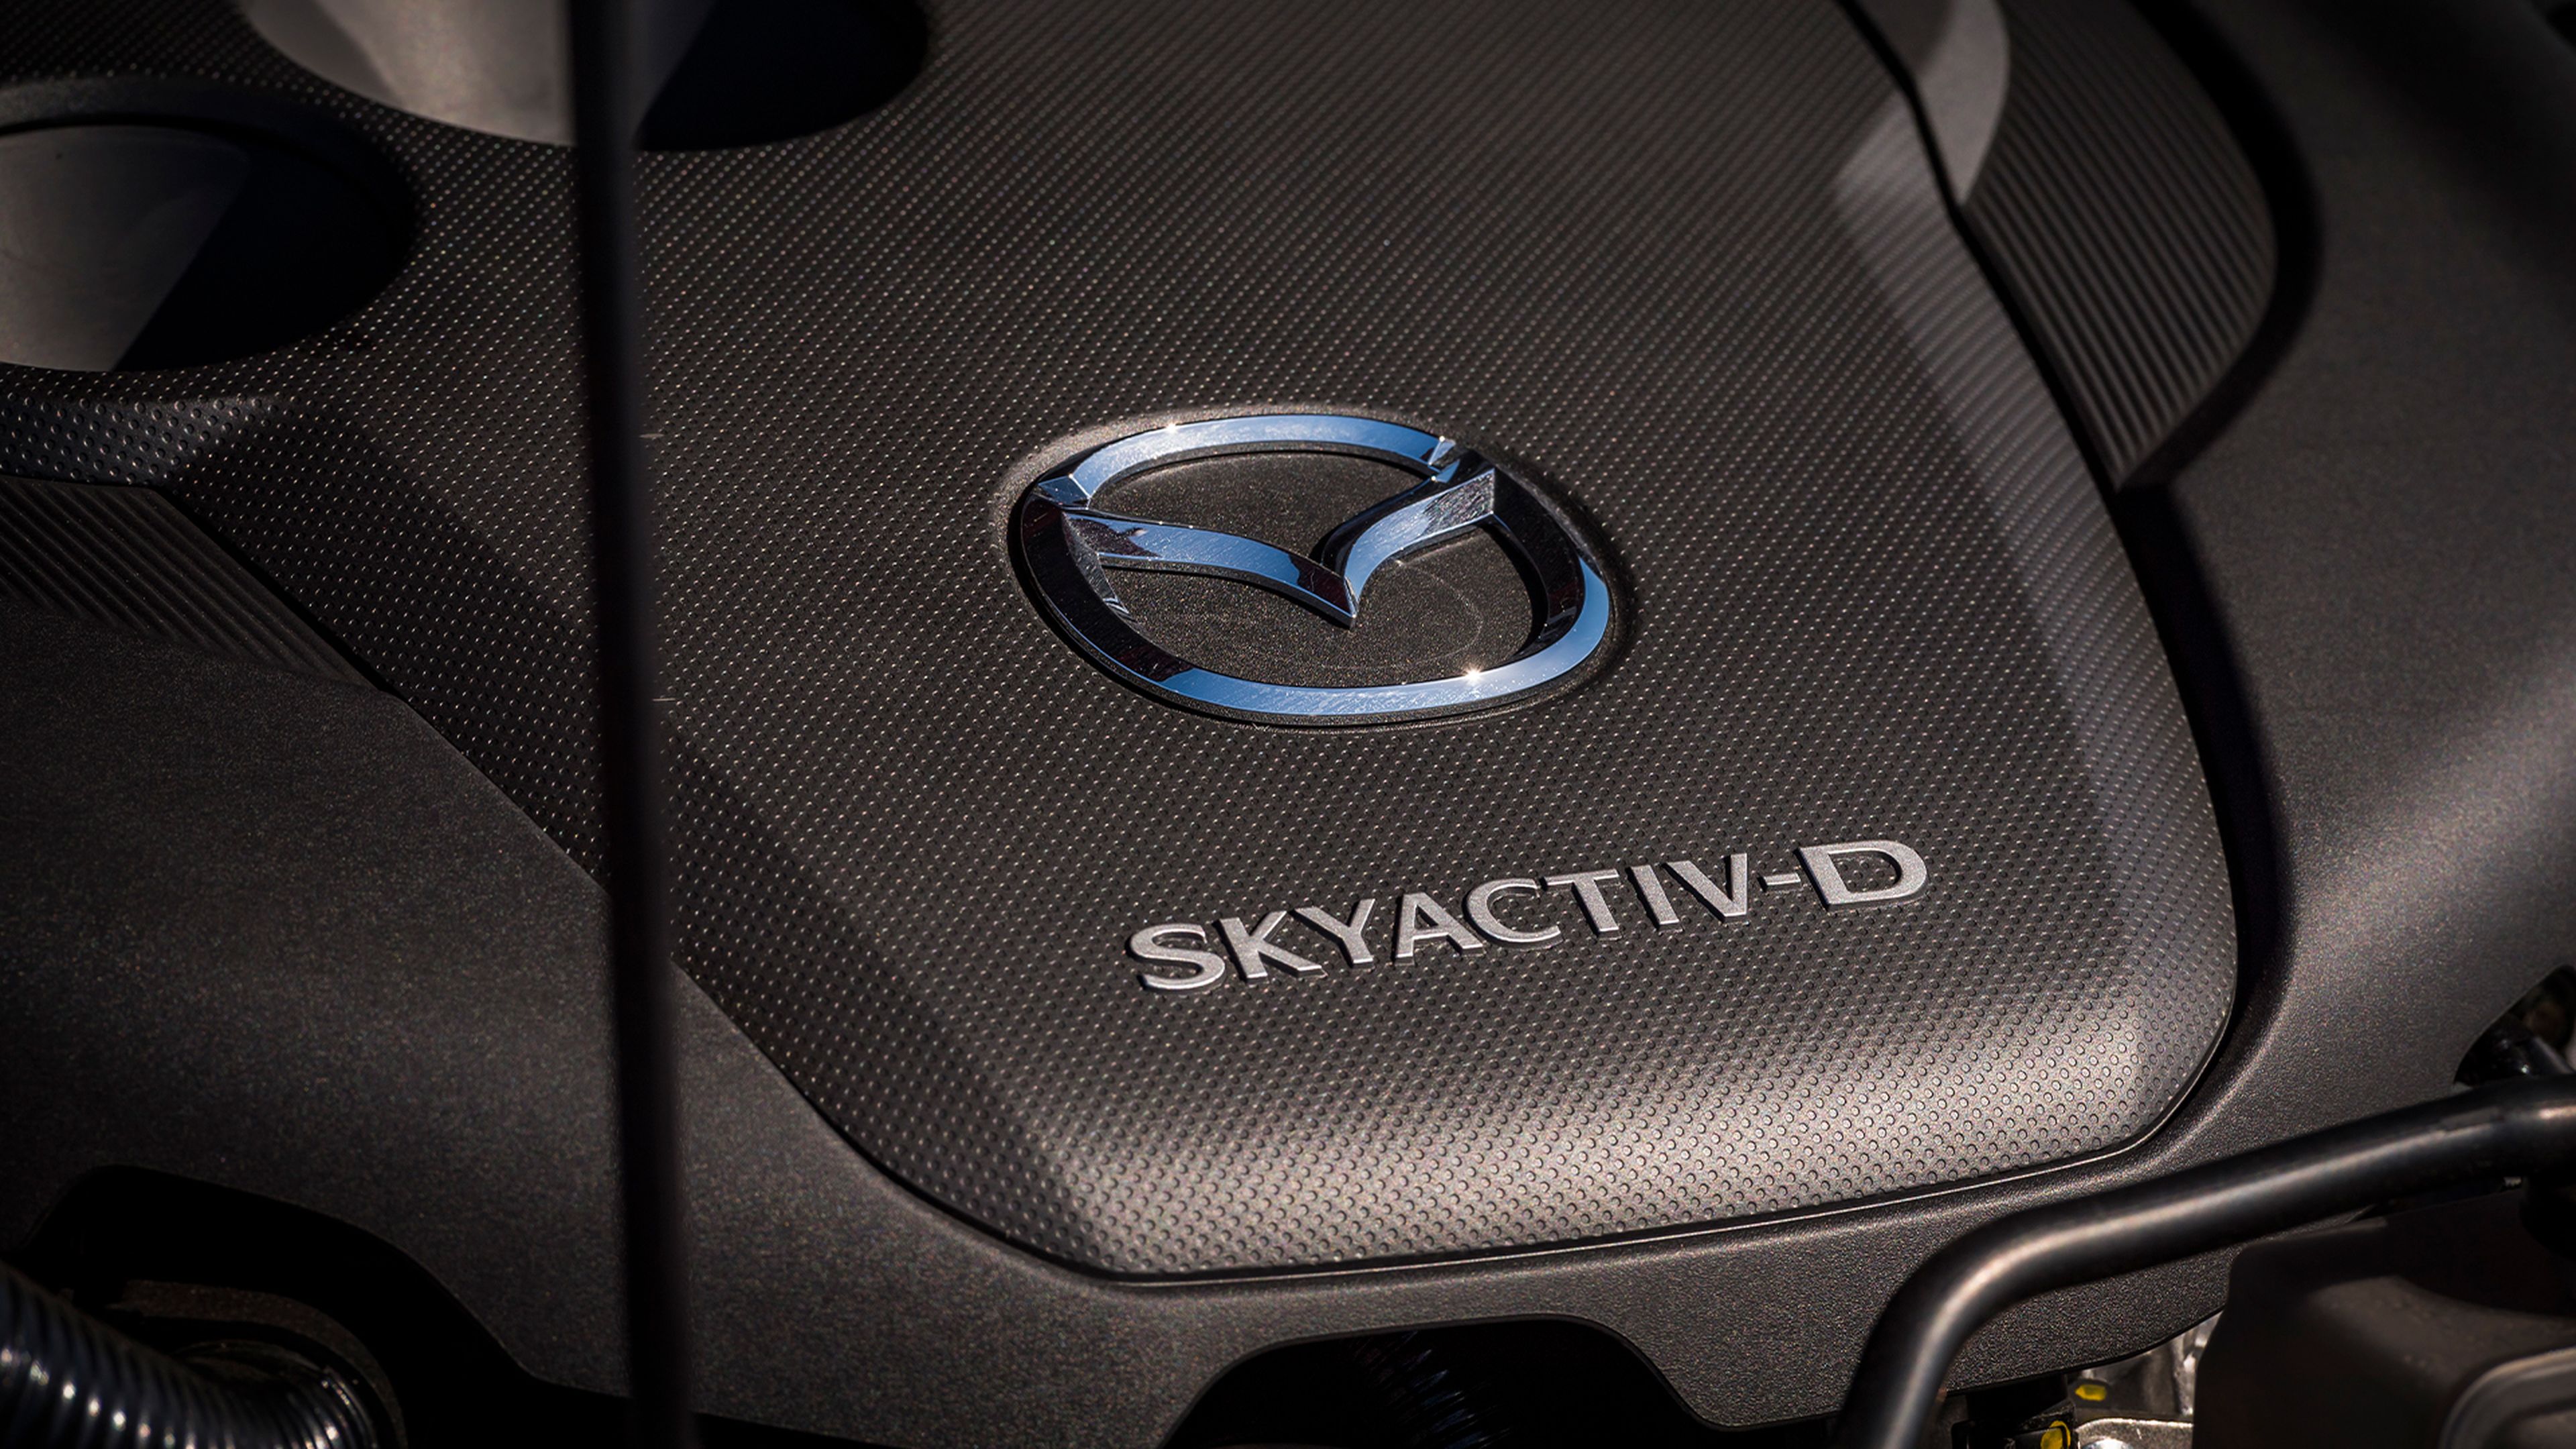 Motor Mazda SKYACTIV D de 4 cilindros en línea turbo.